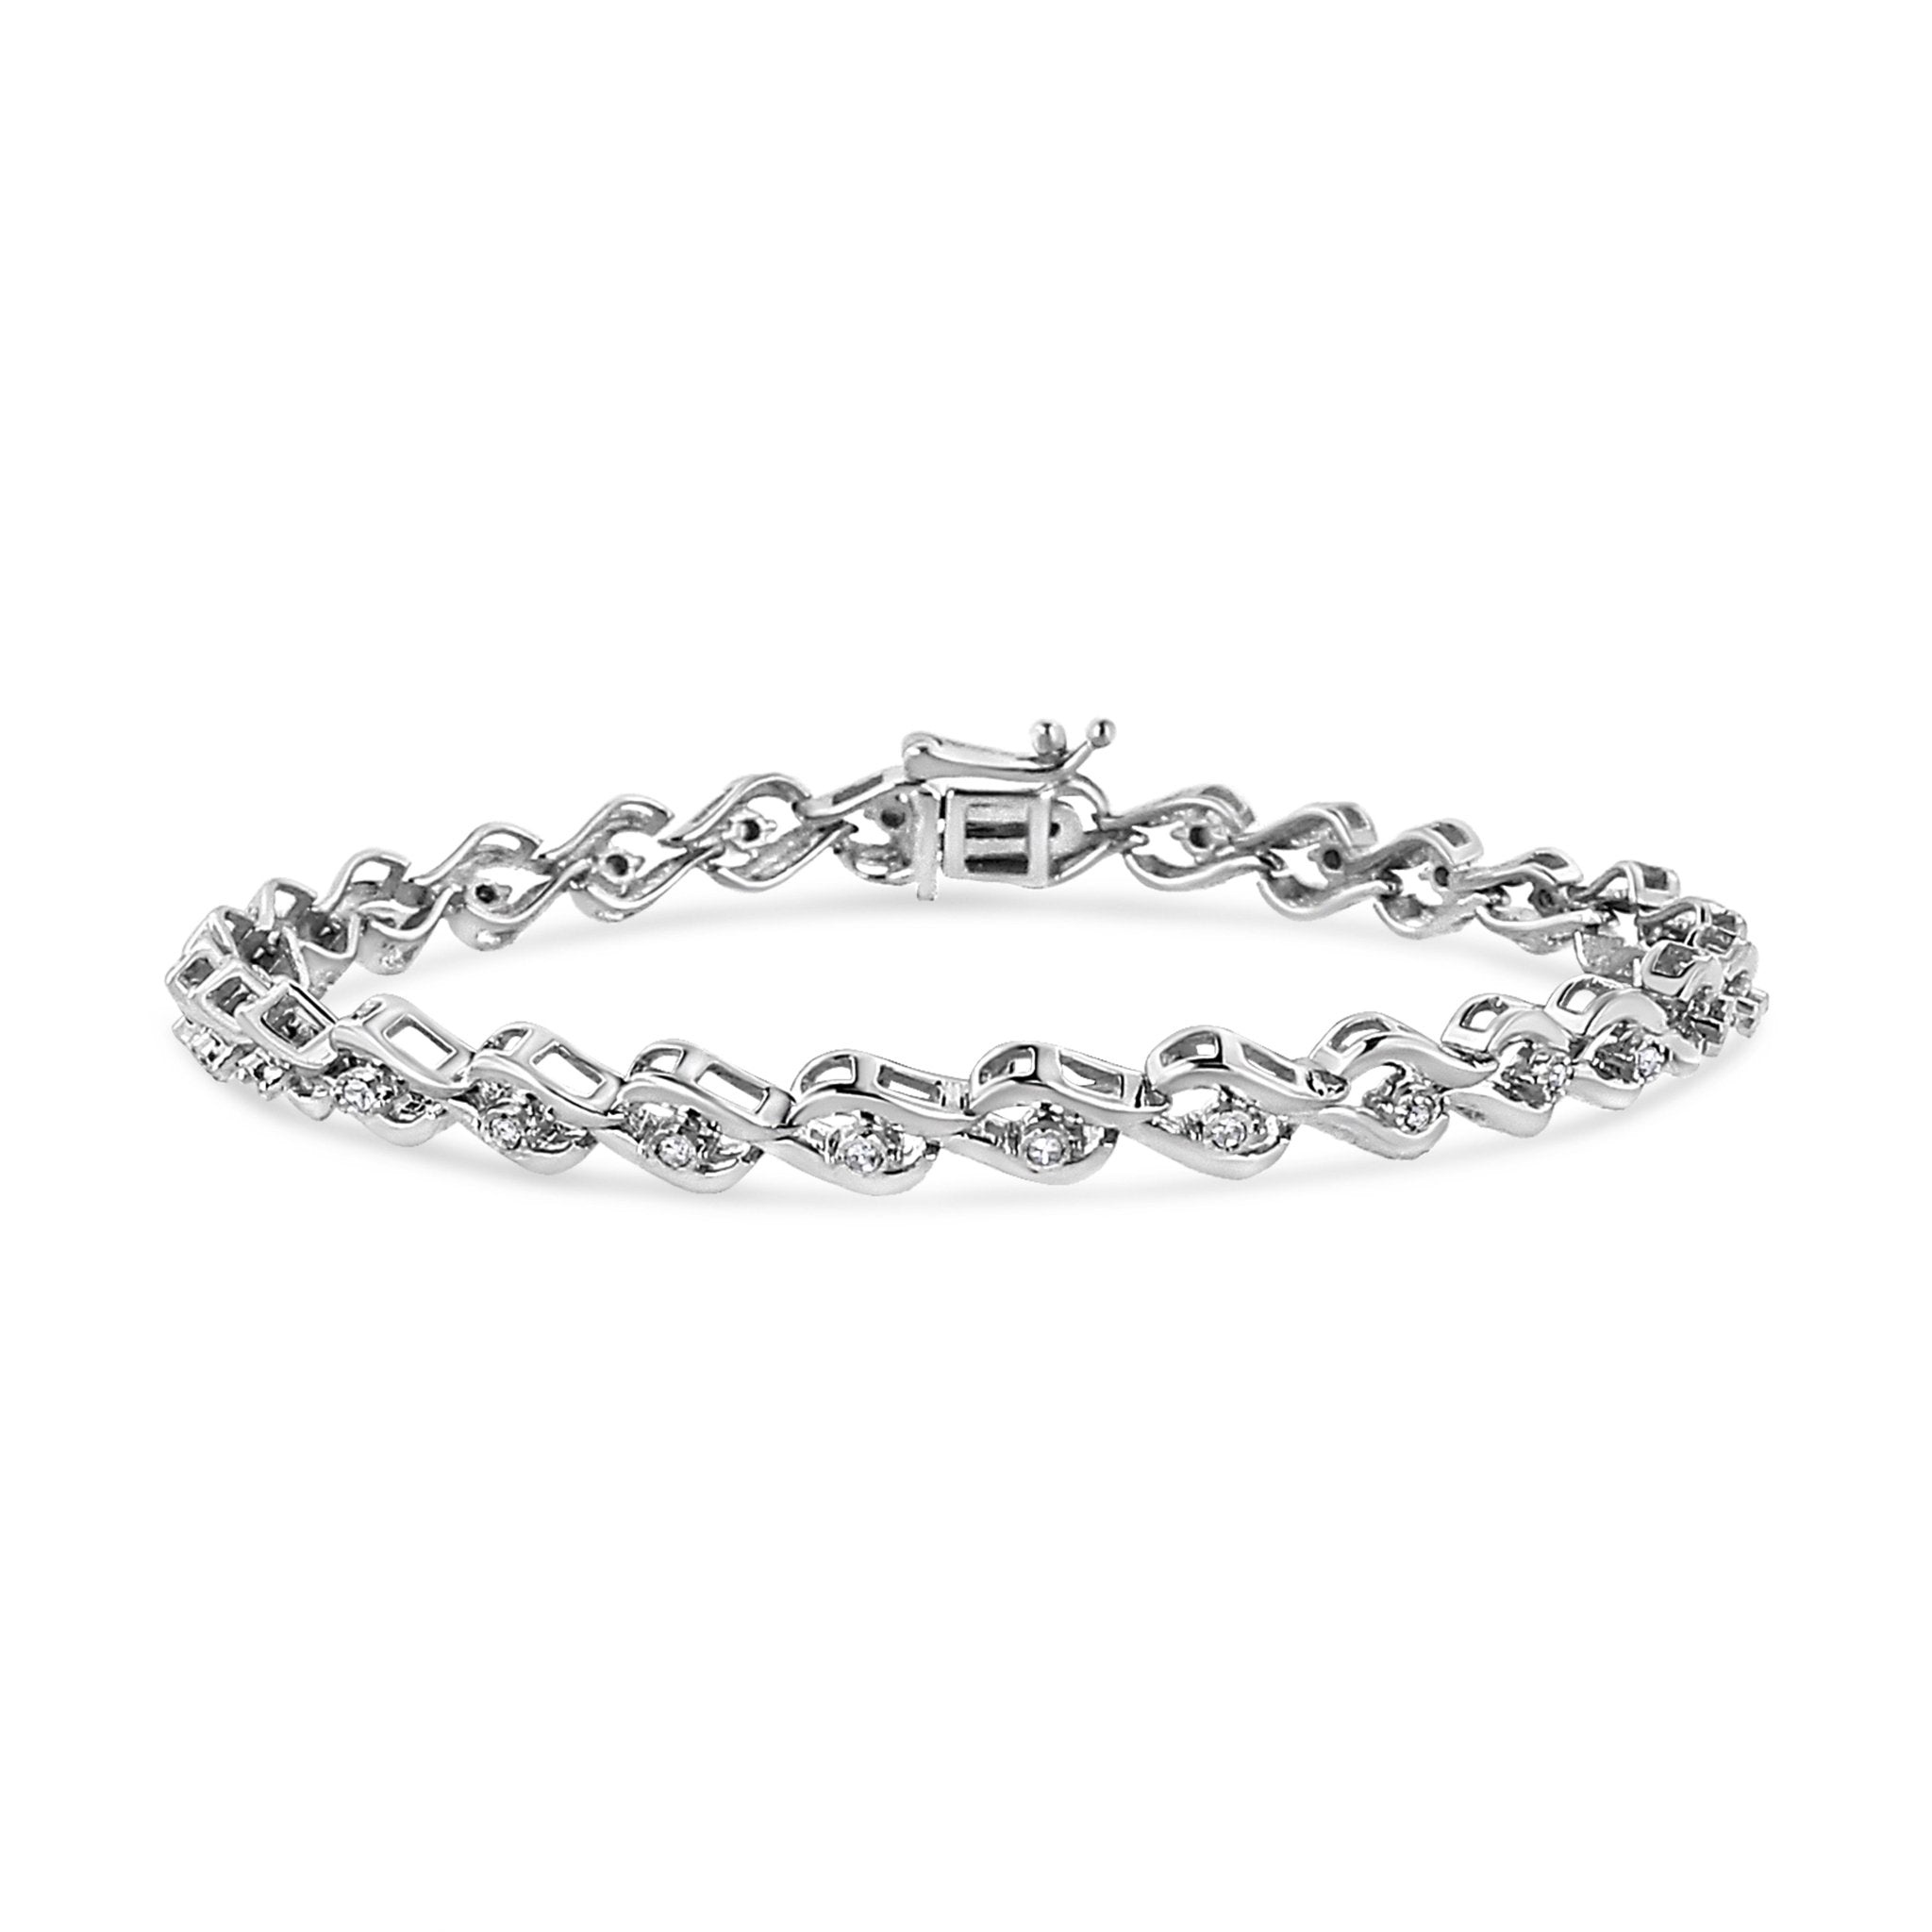 .925 Sterling Silver 1/10 Cttw Round-Cut Diamond Link Bracelet (I-J Color, I3 Promo Clarity) - 7.25